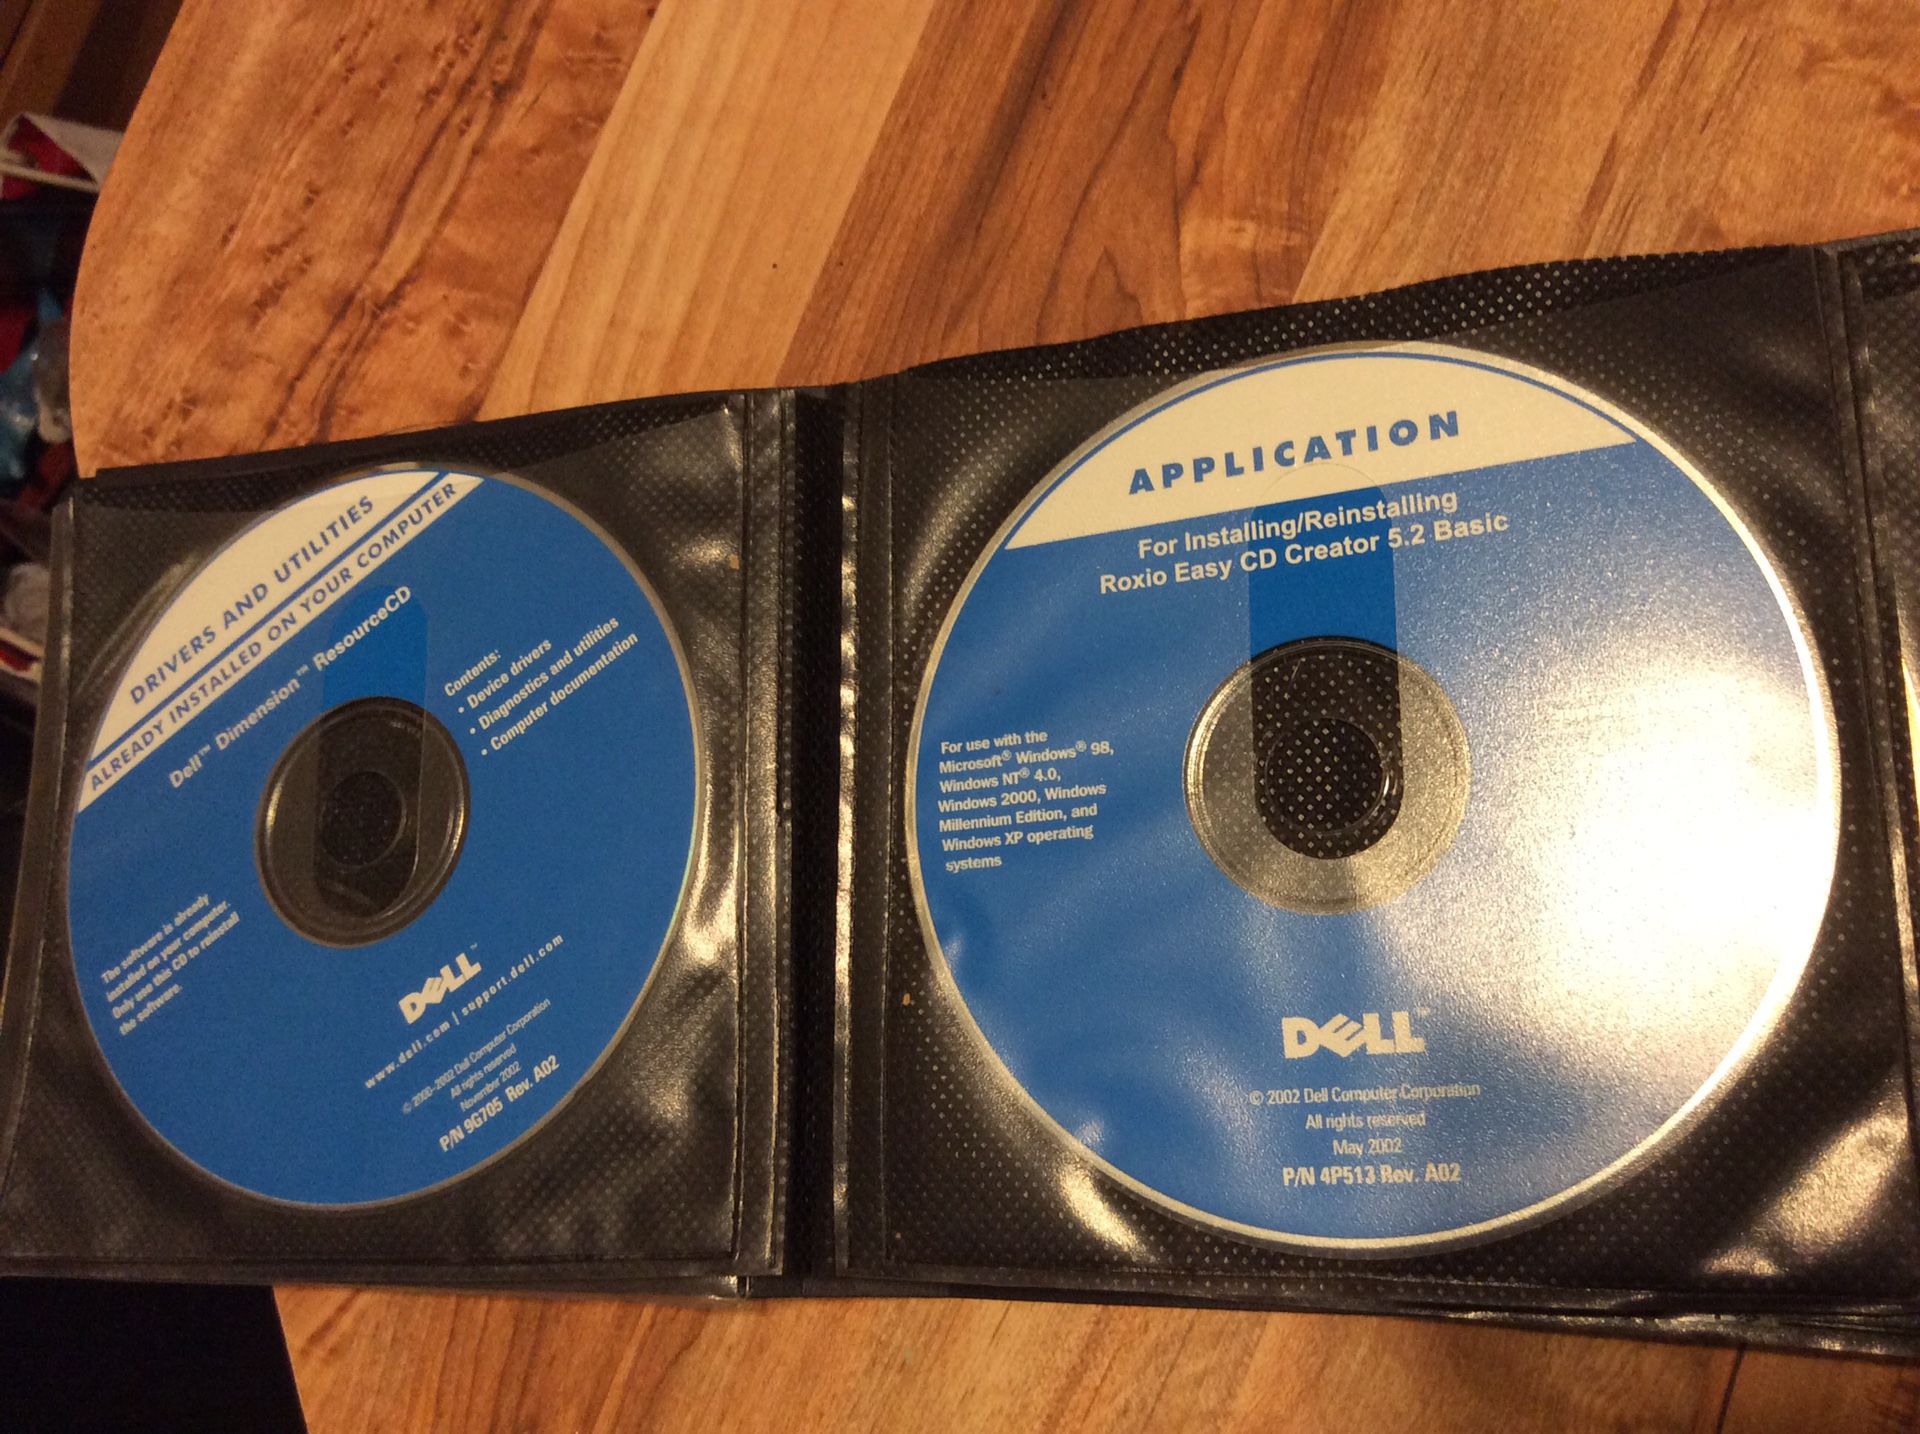 Dell computer software CD